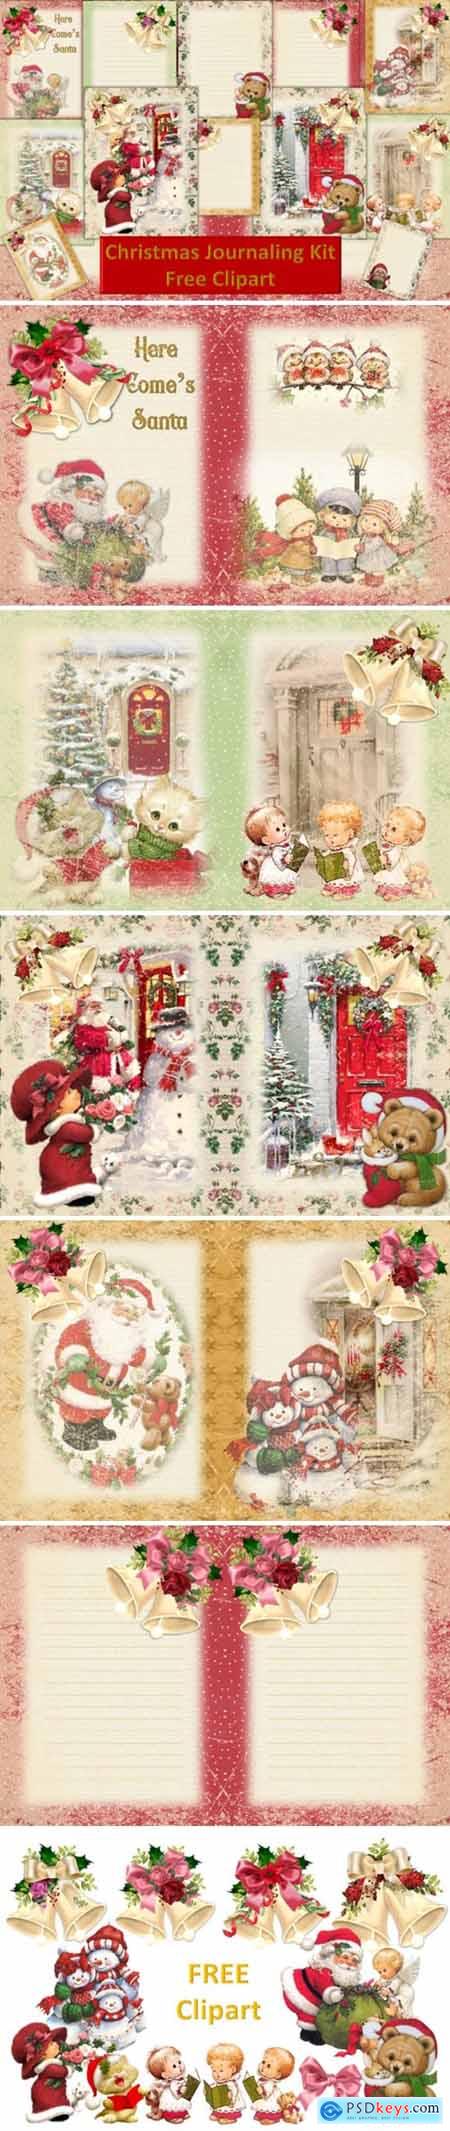 Christmas Junk Journal Kit Free Clipart 1669458